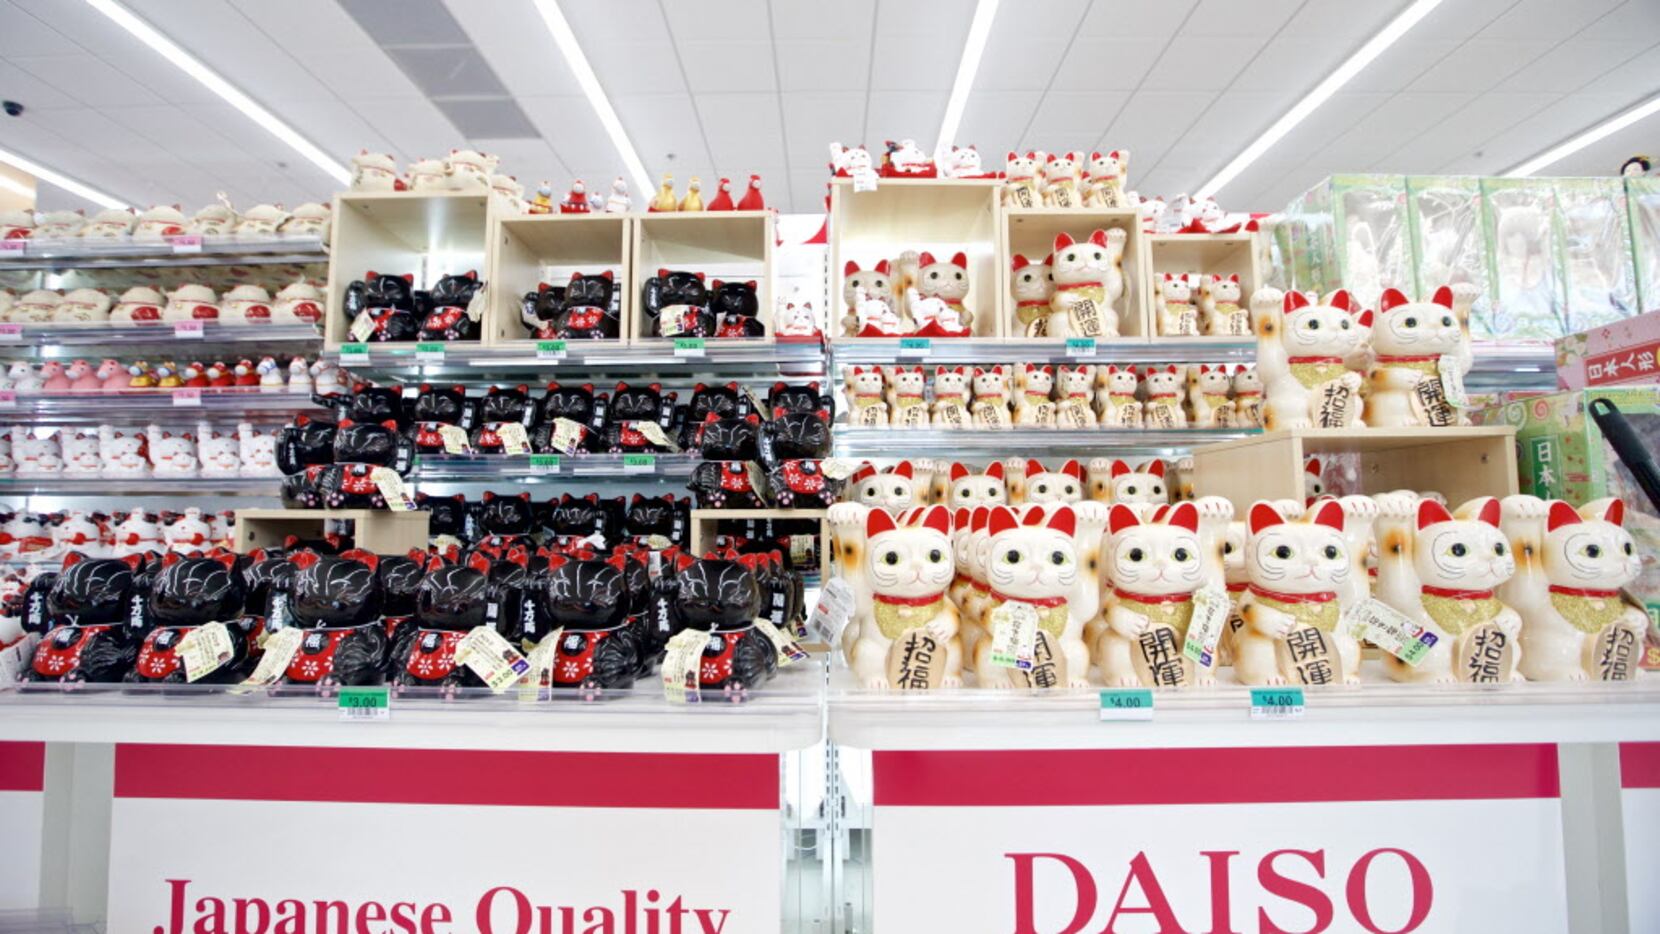 Japanese dollar store Daiso to open 2 DFW stores including Dallas proper -  CultureMap Dallas